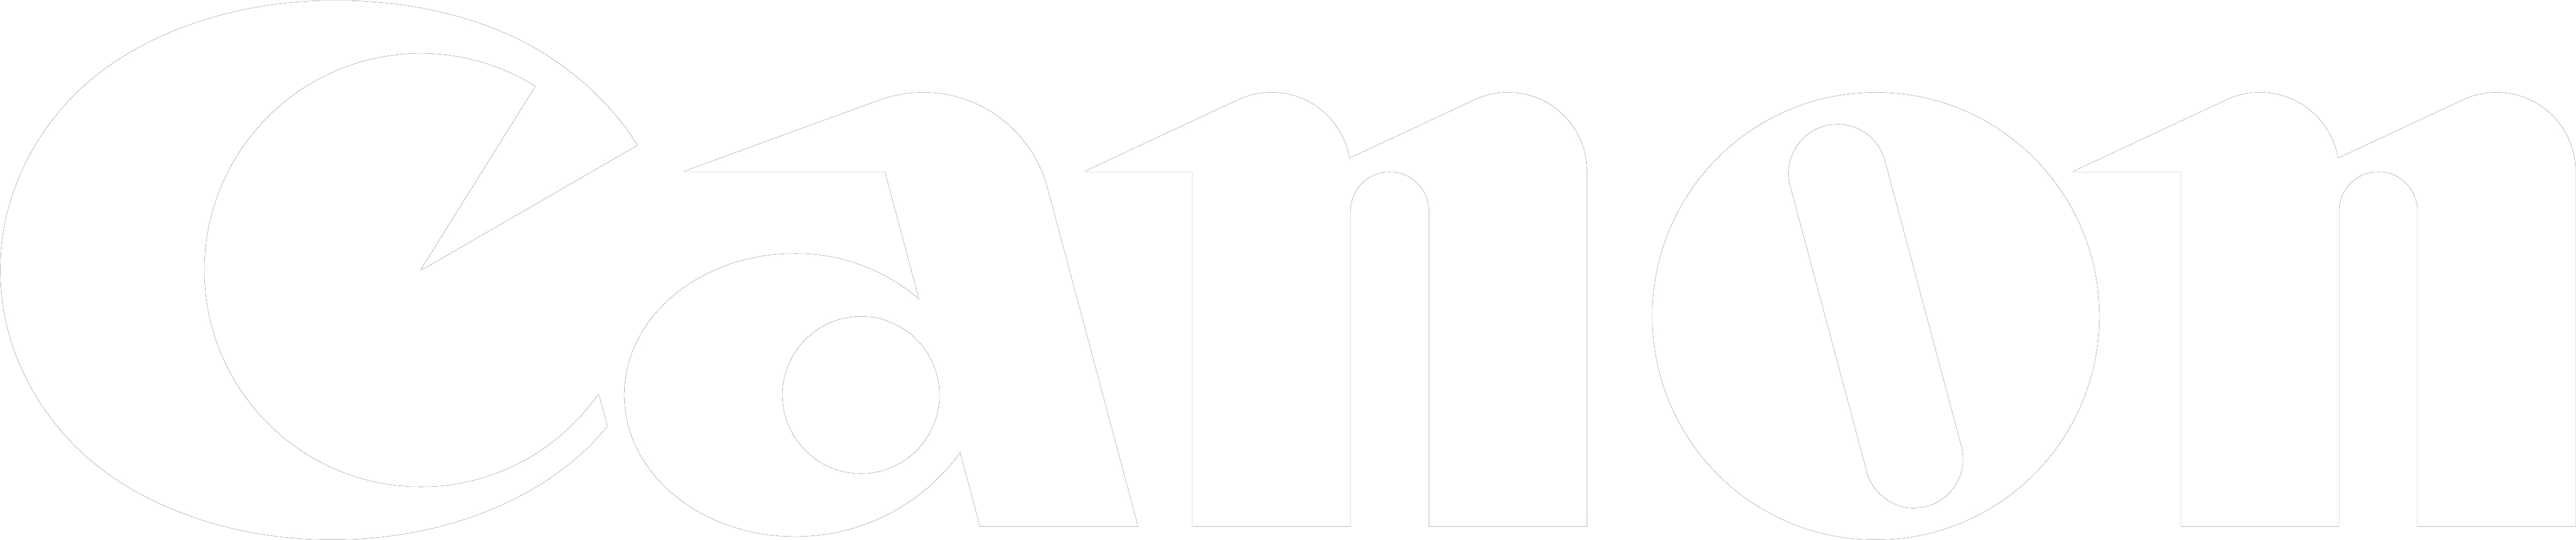 Canon Logo Brand Identity PNG image